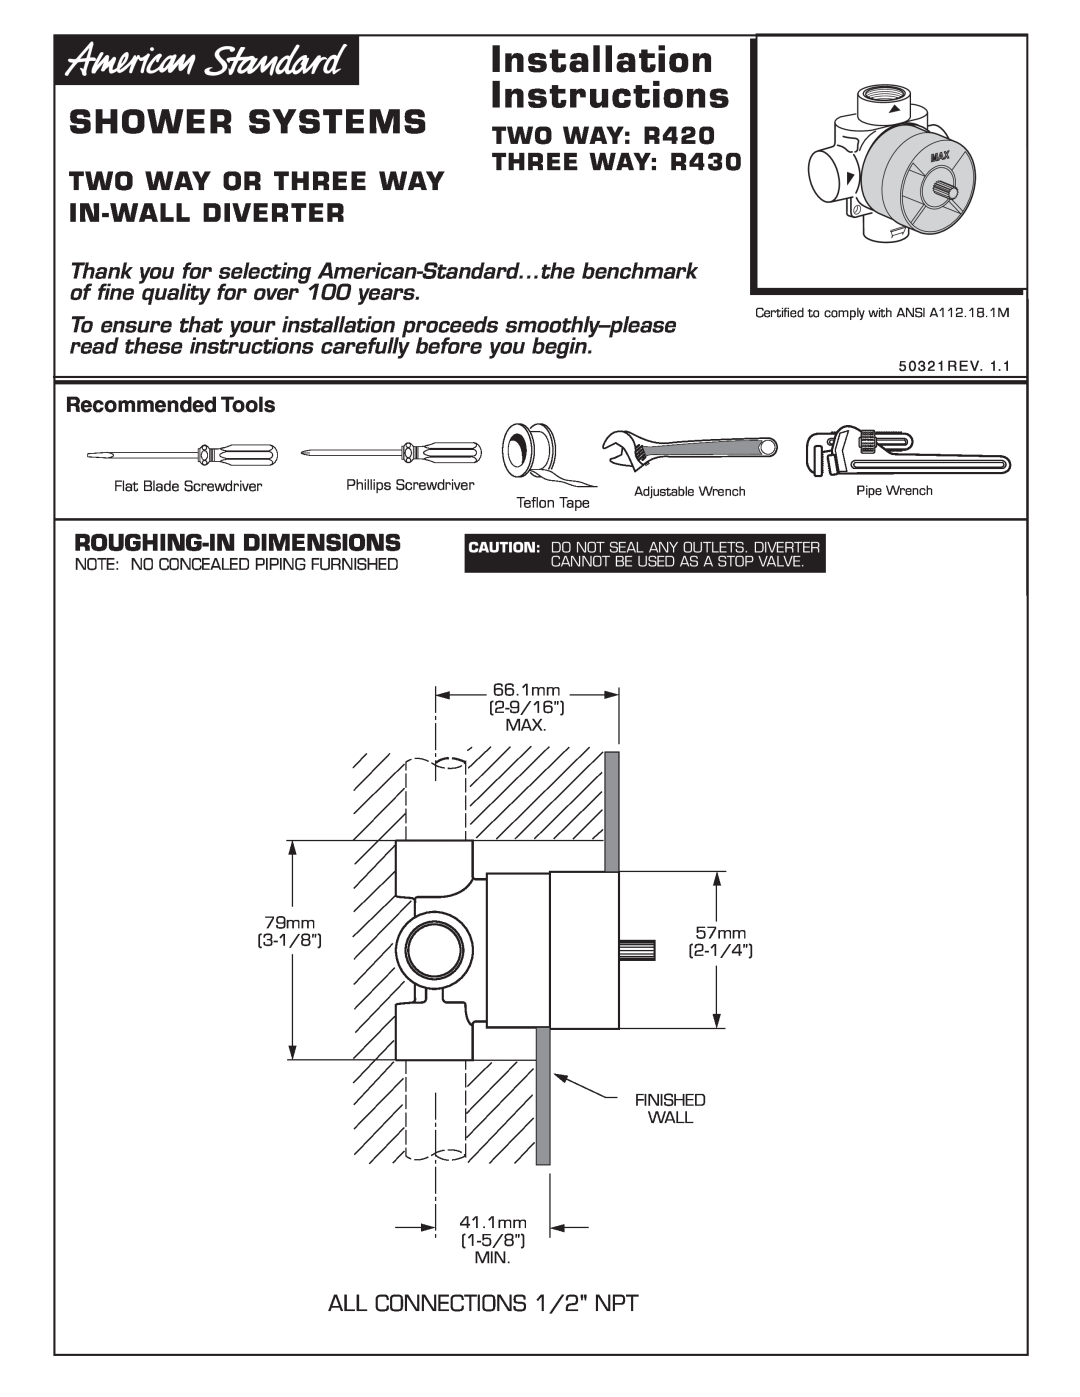 American Standard Shower Systems installation instructions Installation Instructions, TWO WAY R420 THREE WAY R430 